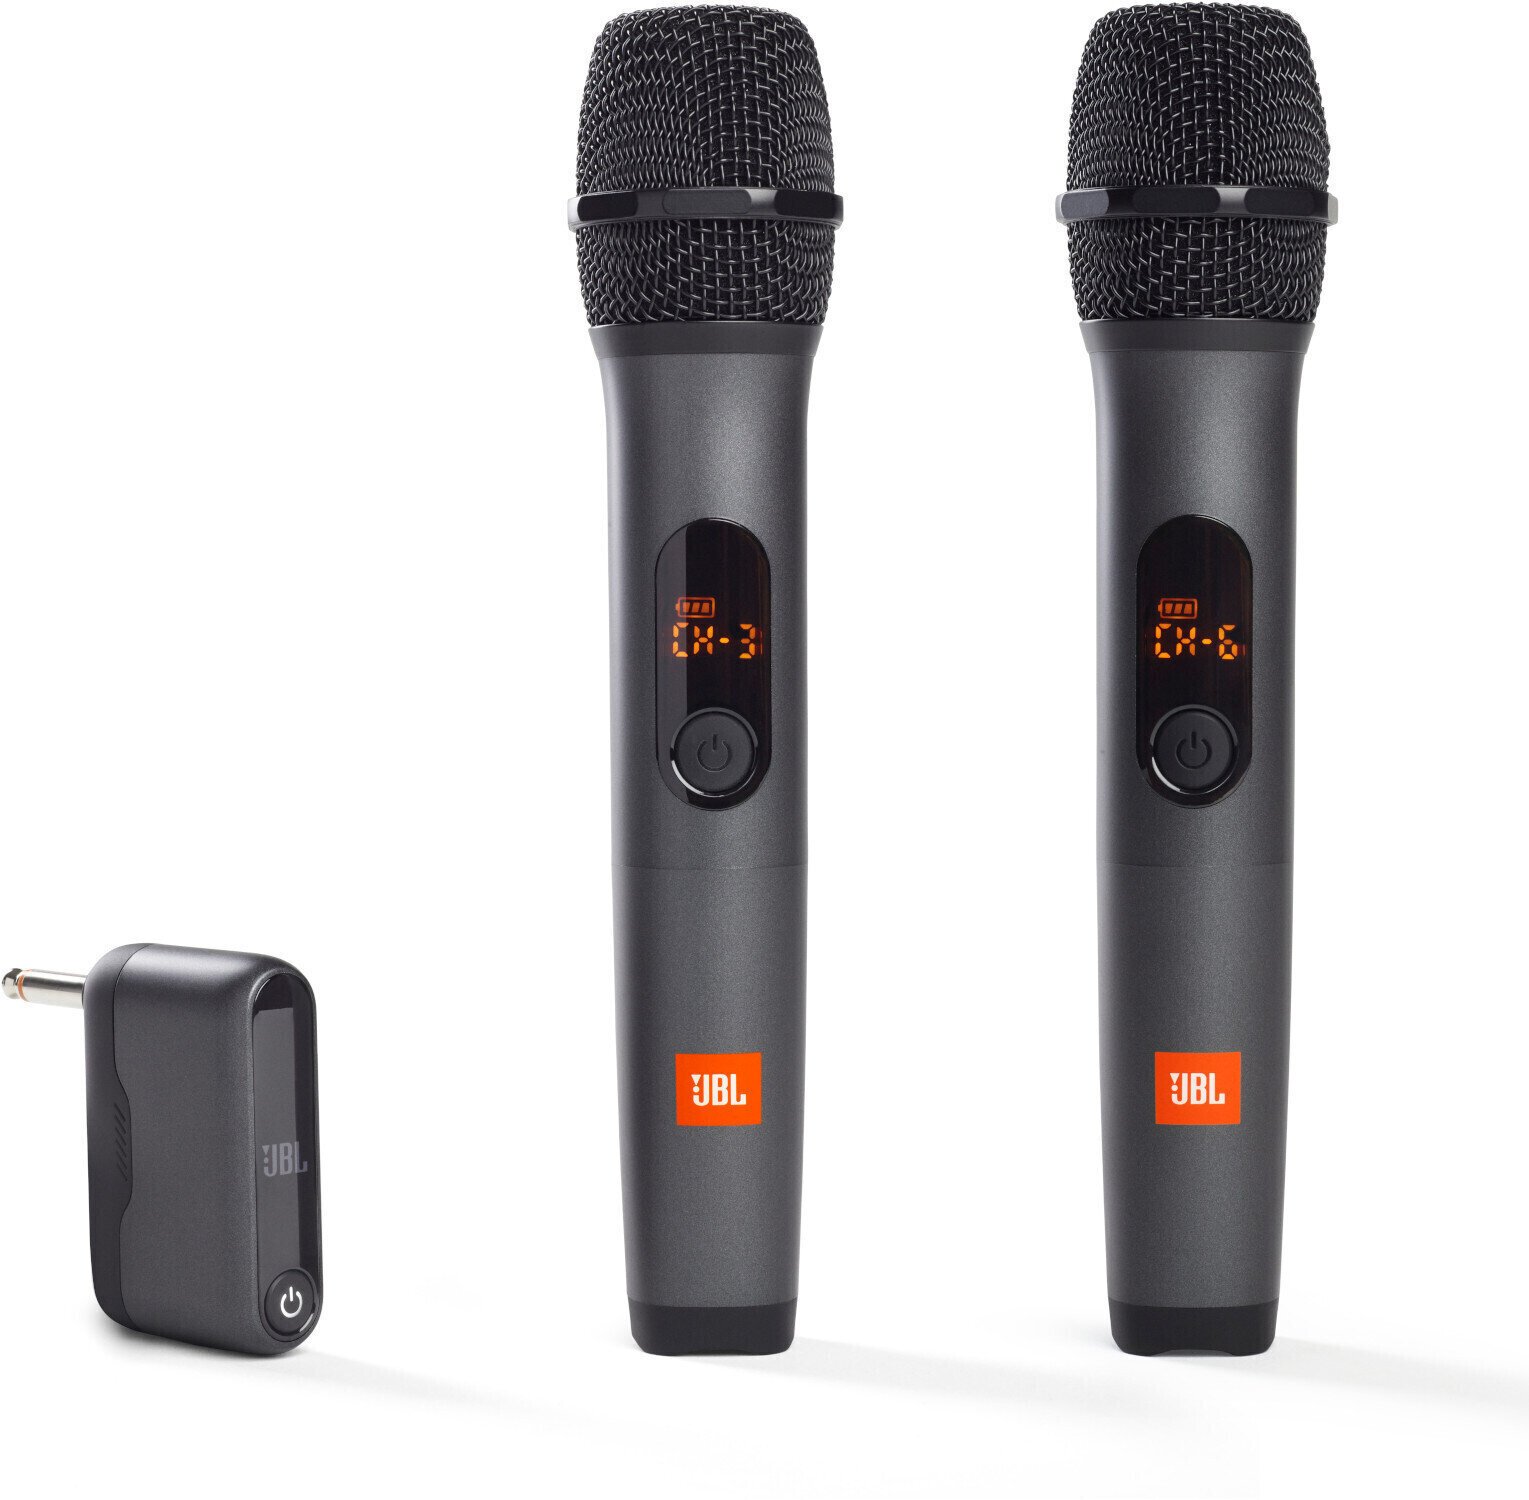 Handheld draadloos systeem JBL Wireless Microphone